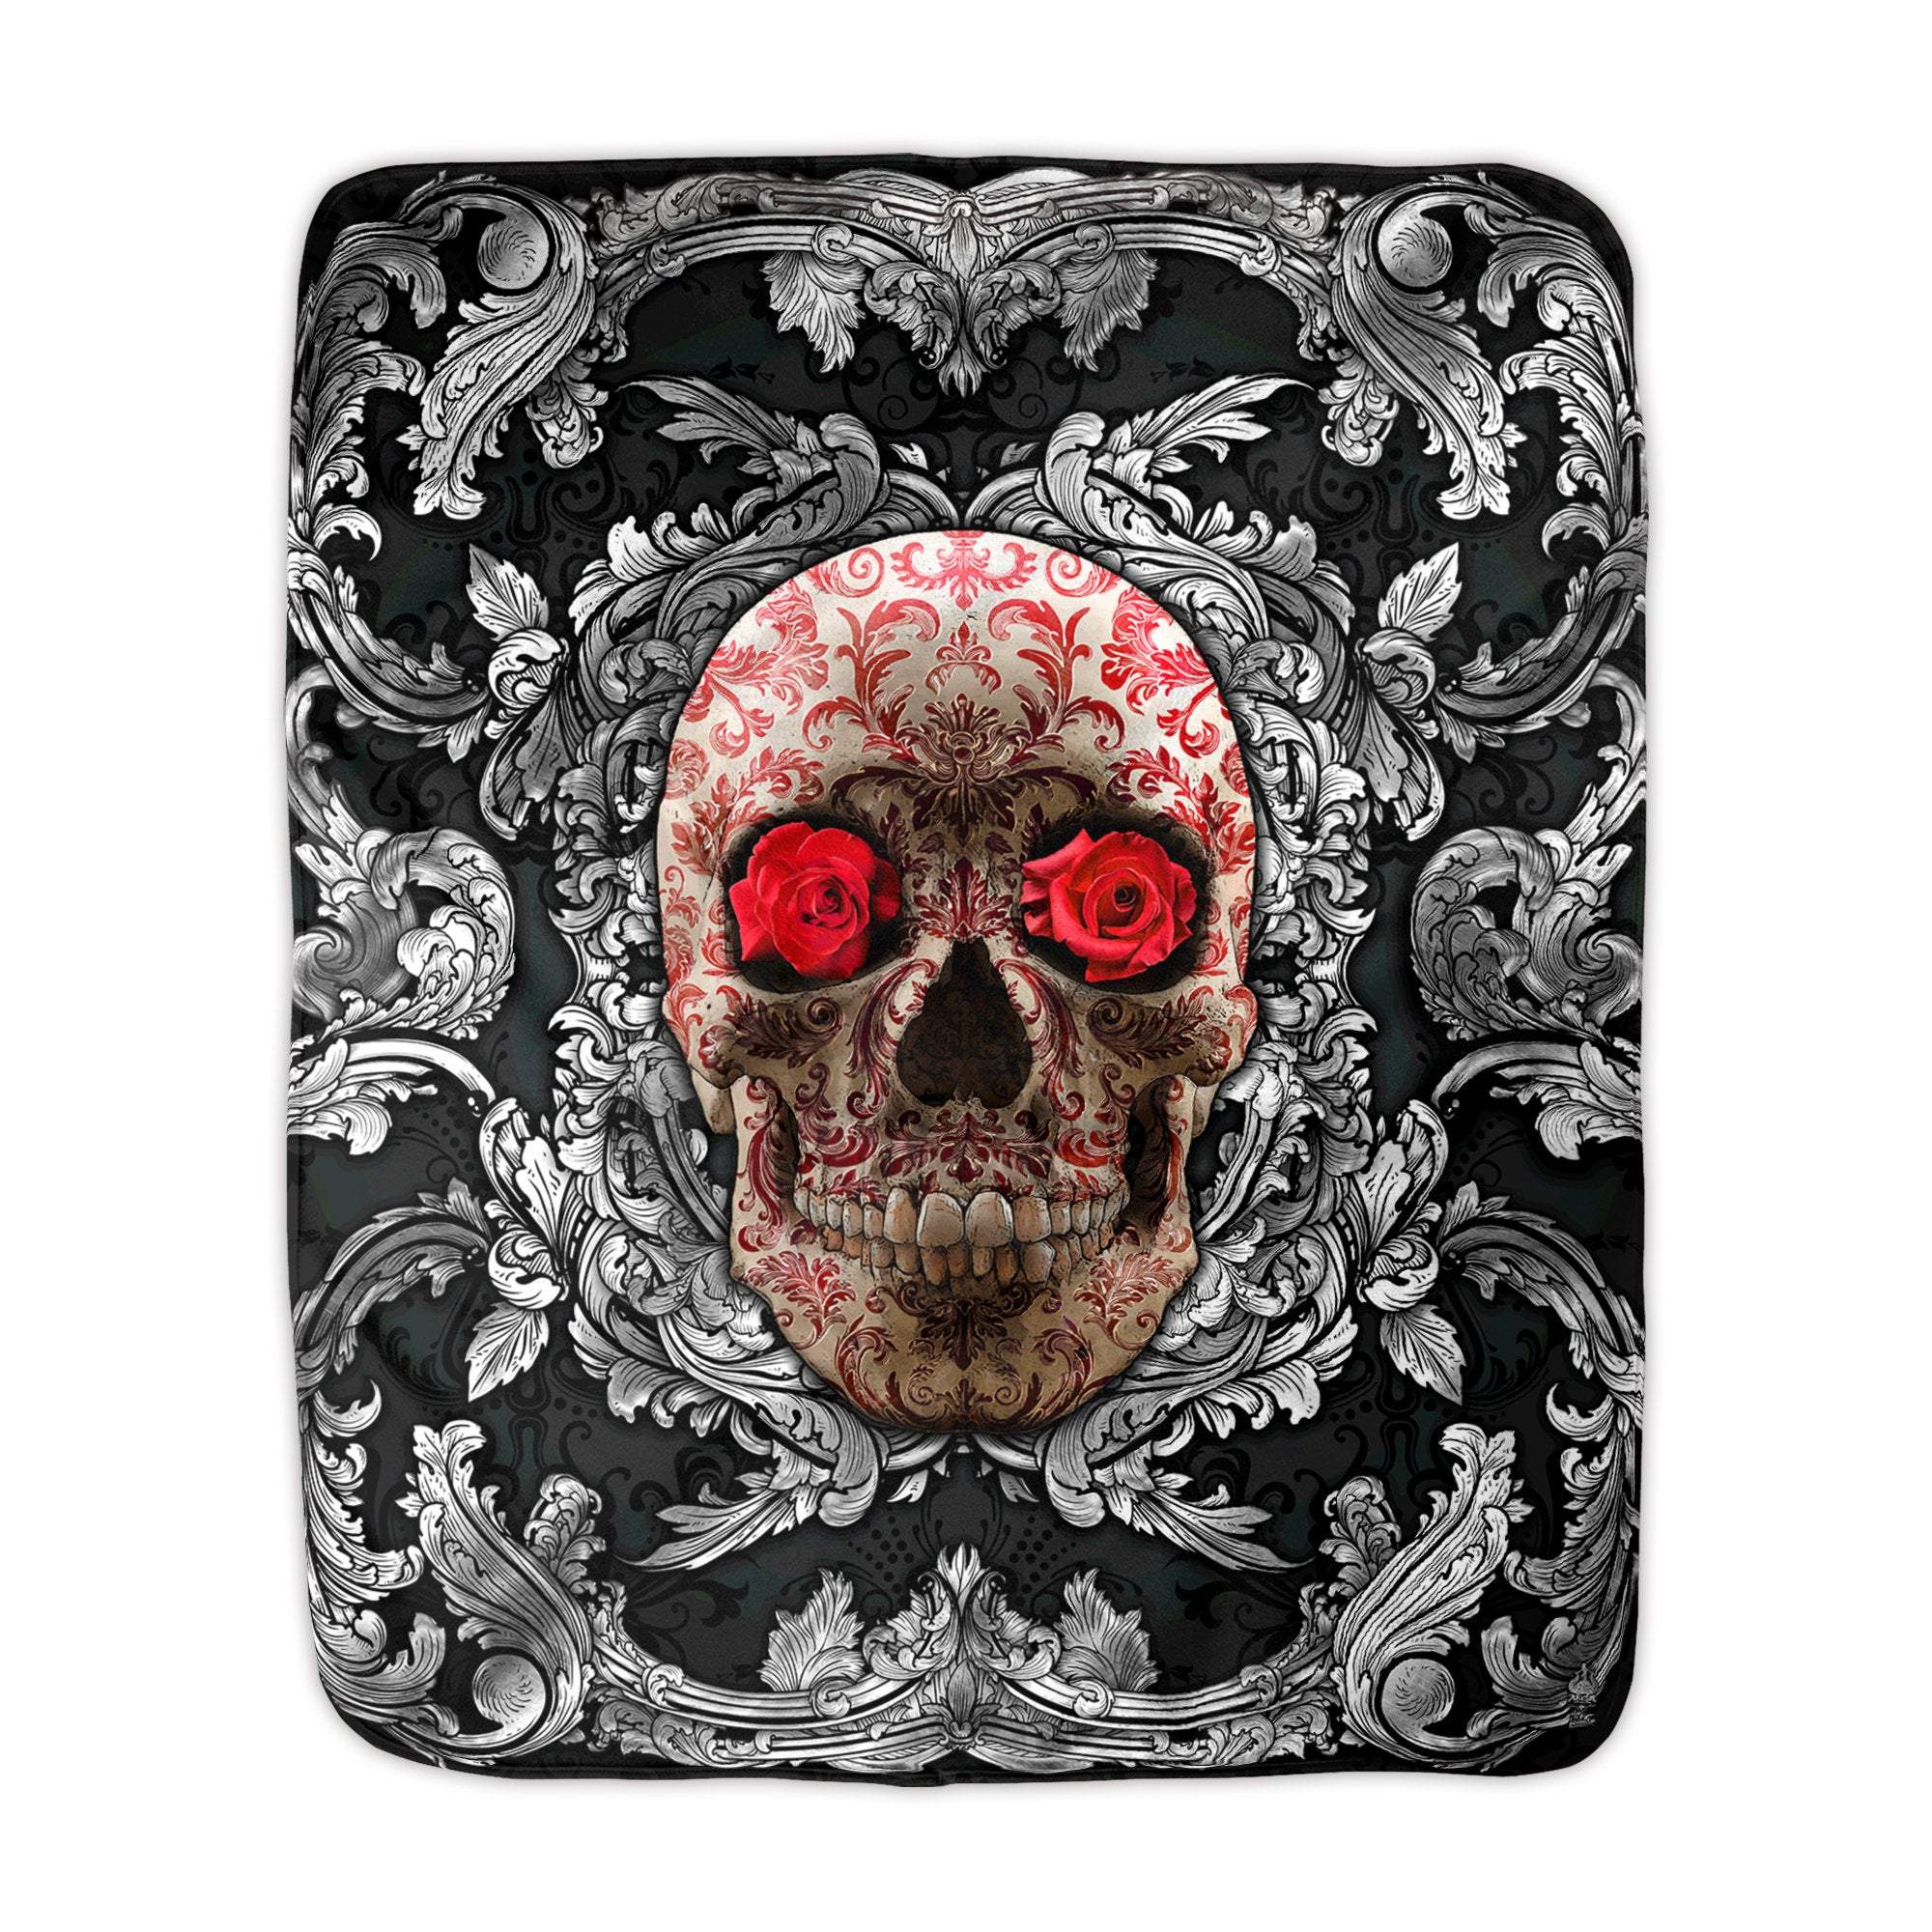 Skull Throw Fleece Blanket, Macabre Art, Victorian Decor - Silver & Red Roses - Abysm Internal